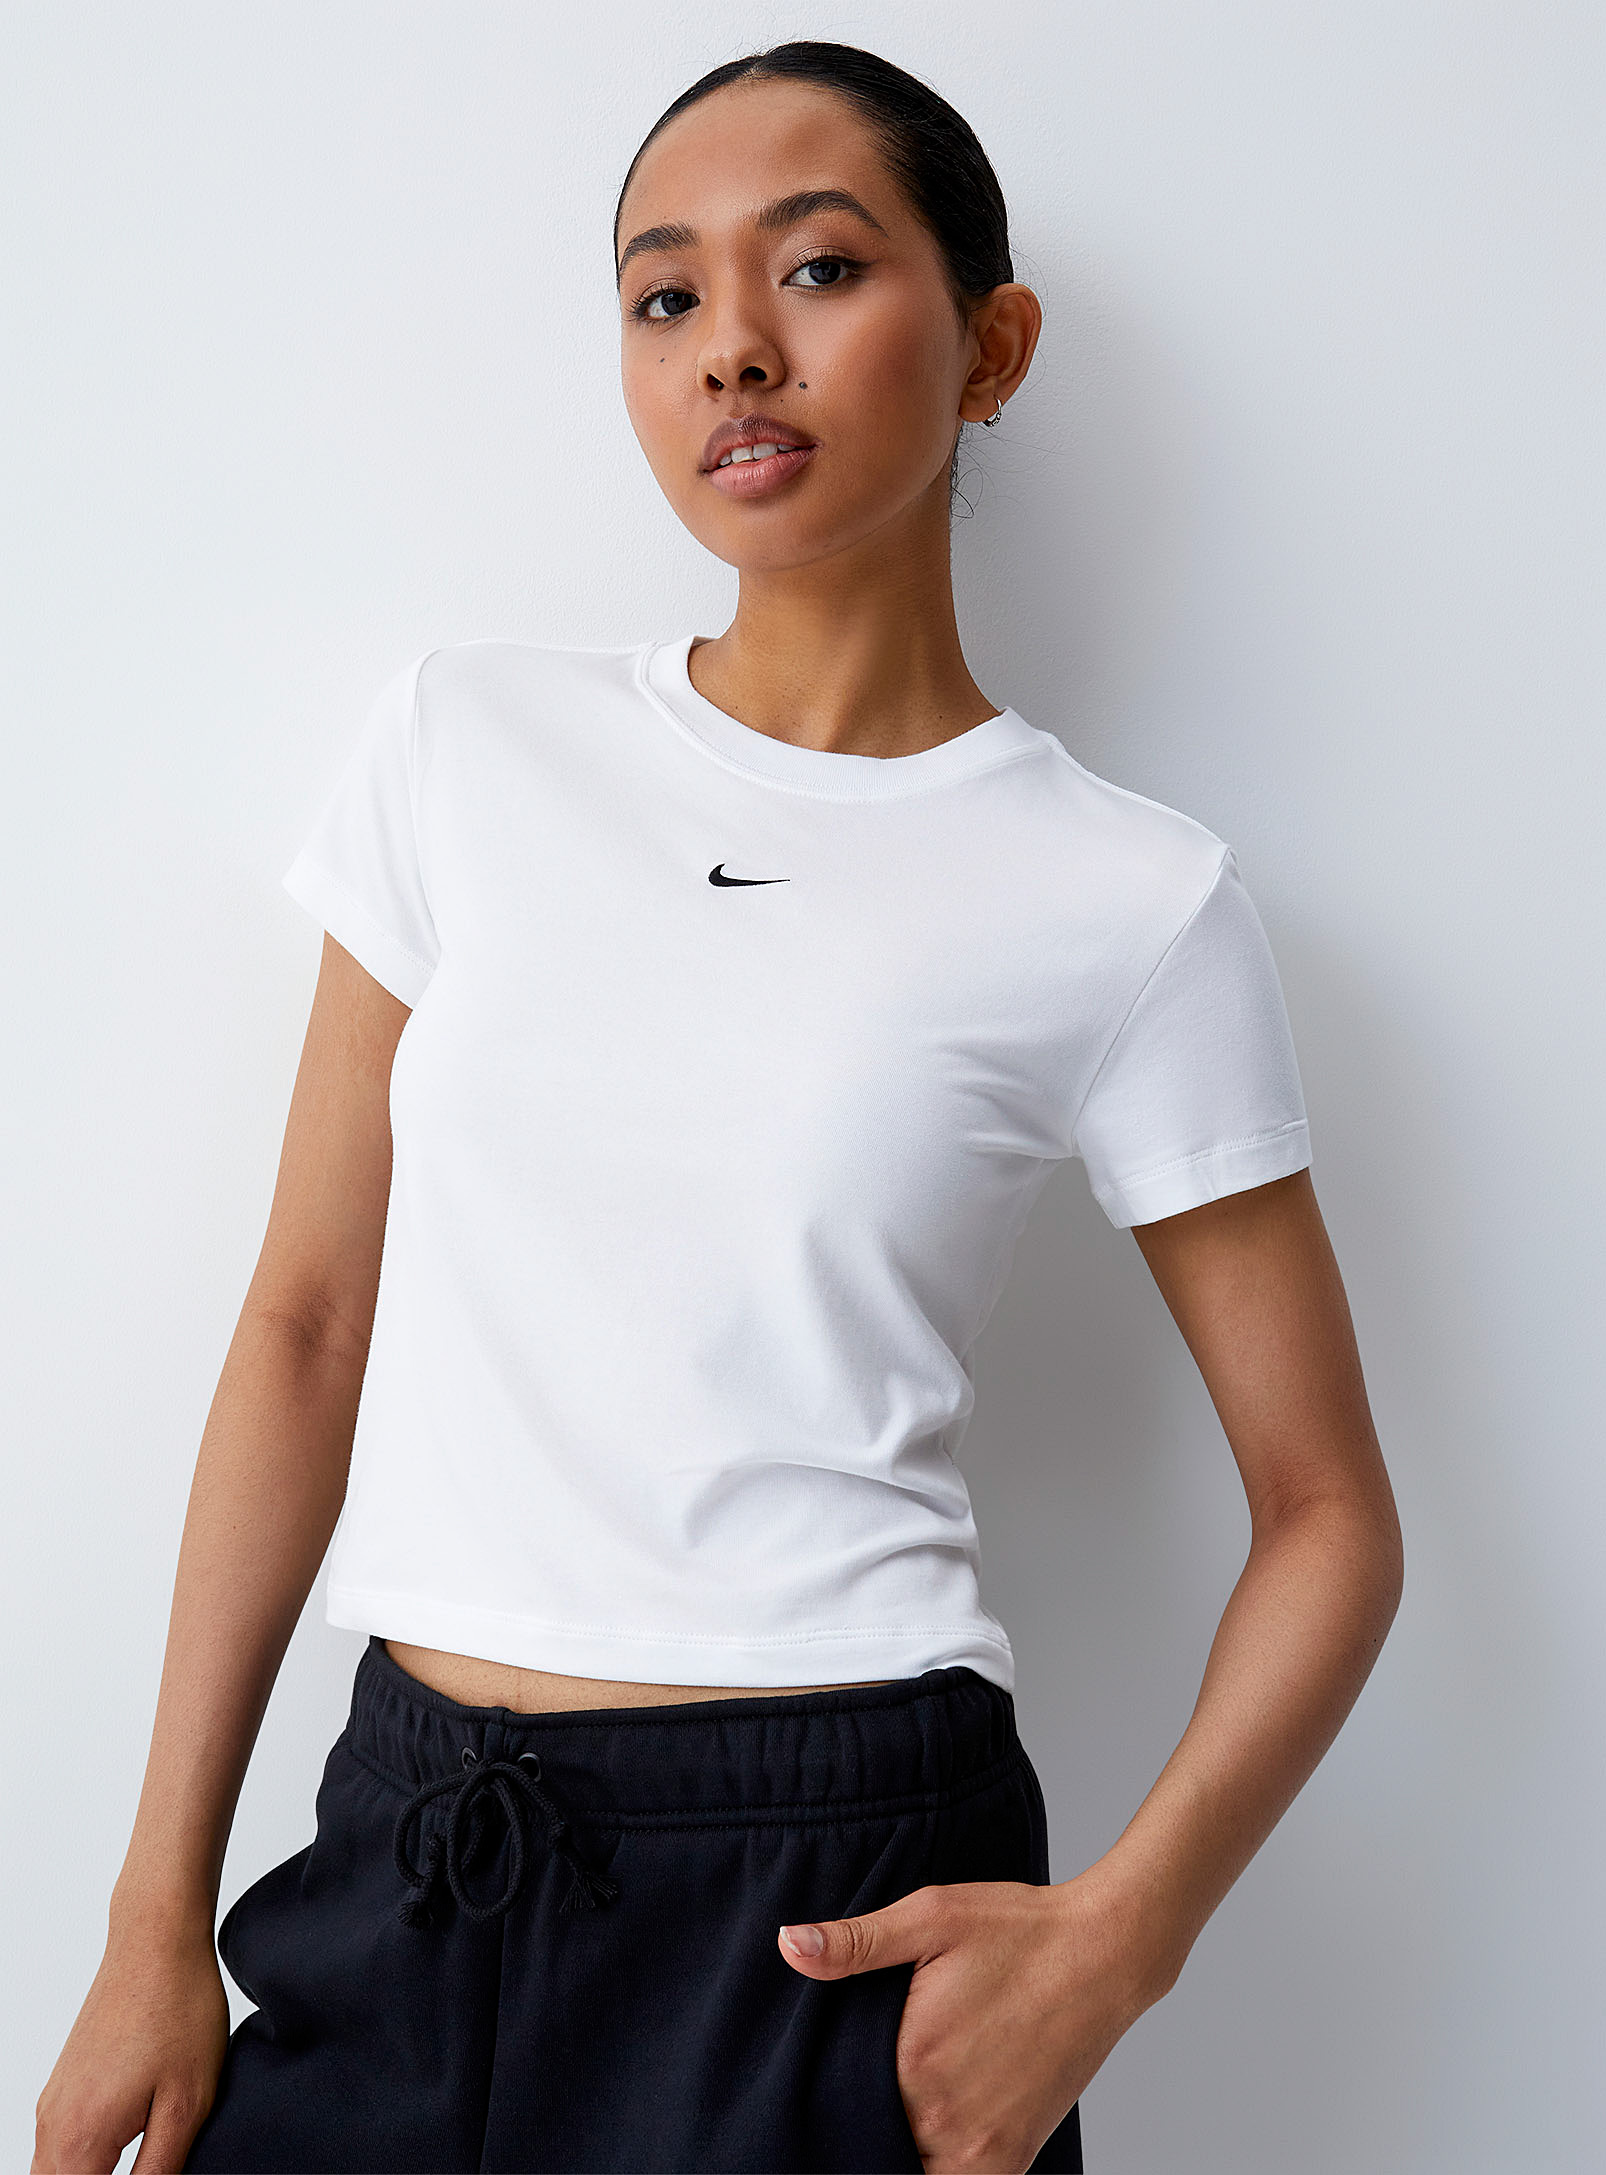 Nike - Women's Mini-logo Tee Shirt